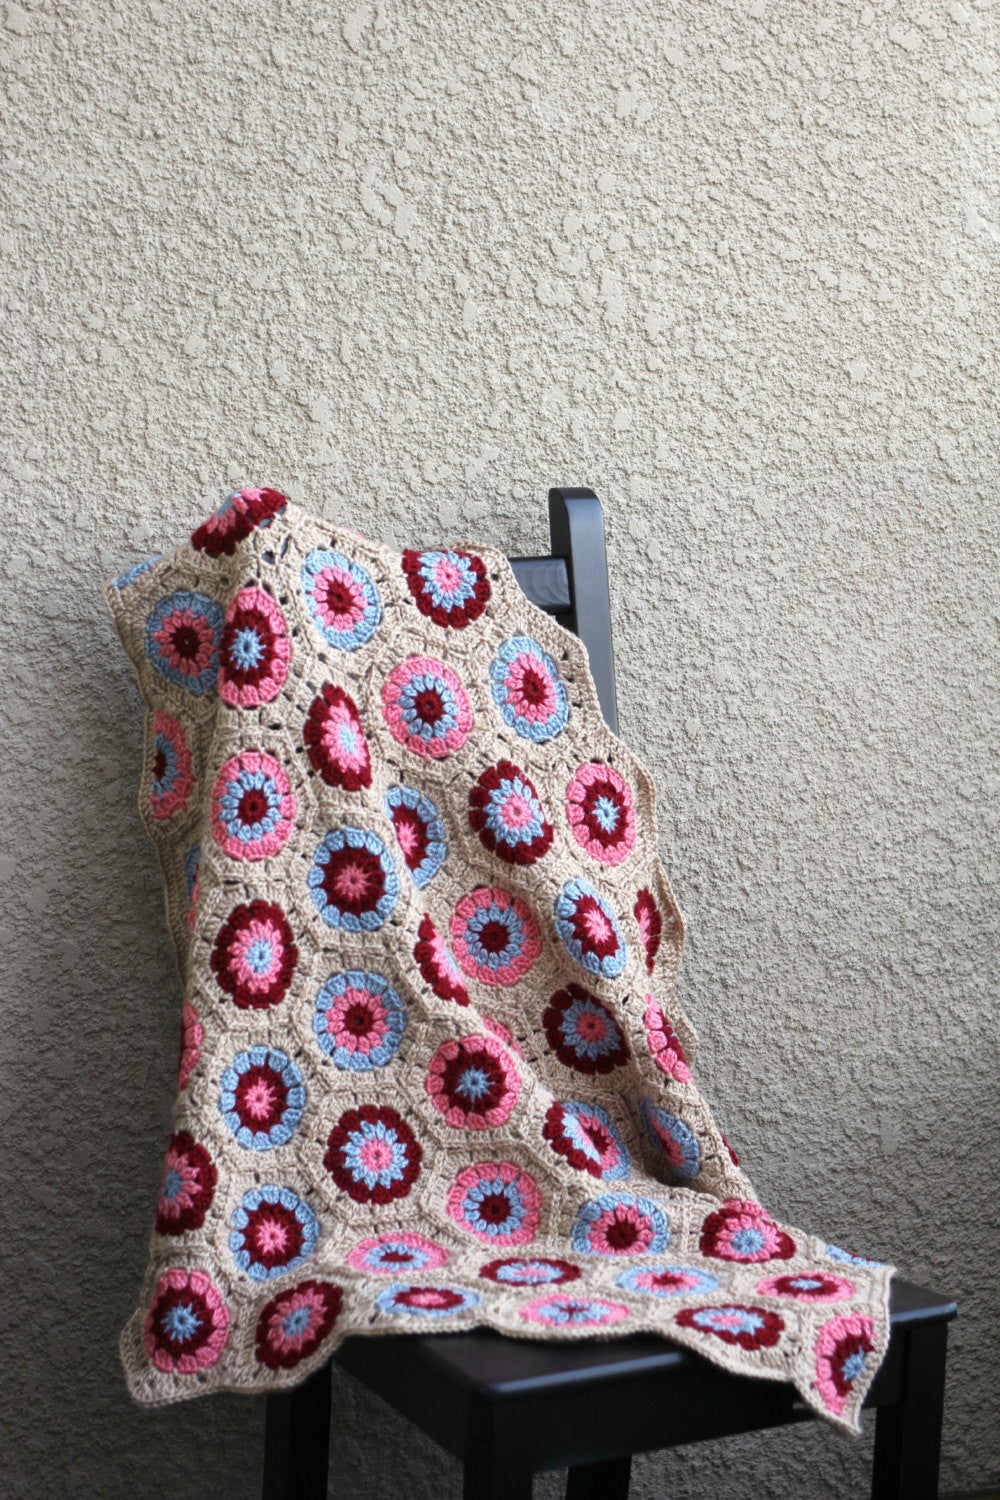 Crochet baby blanket for sale